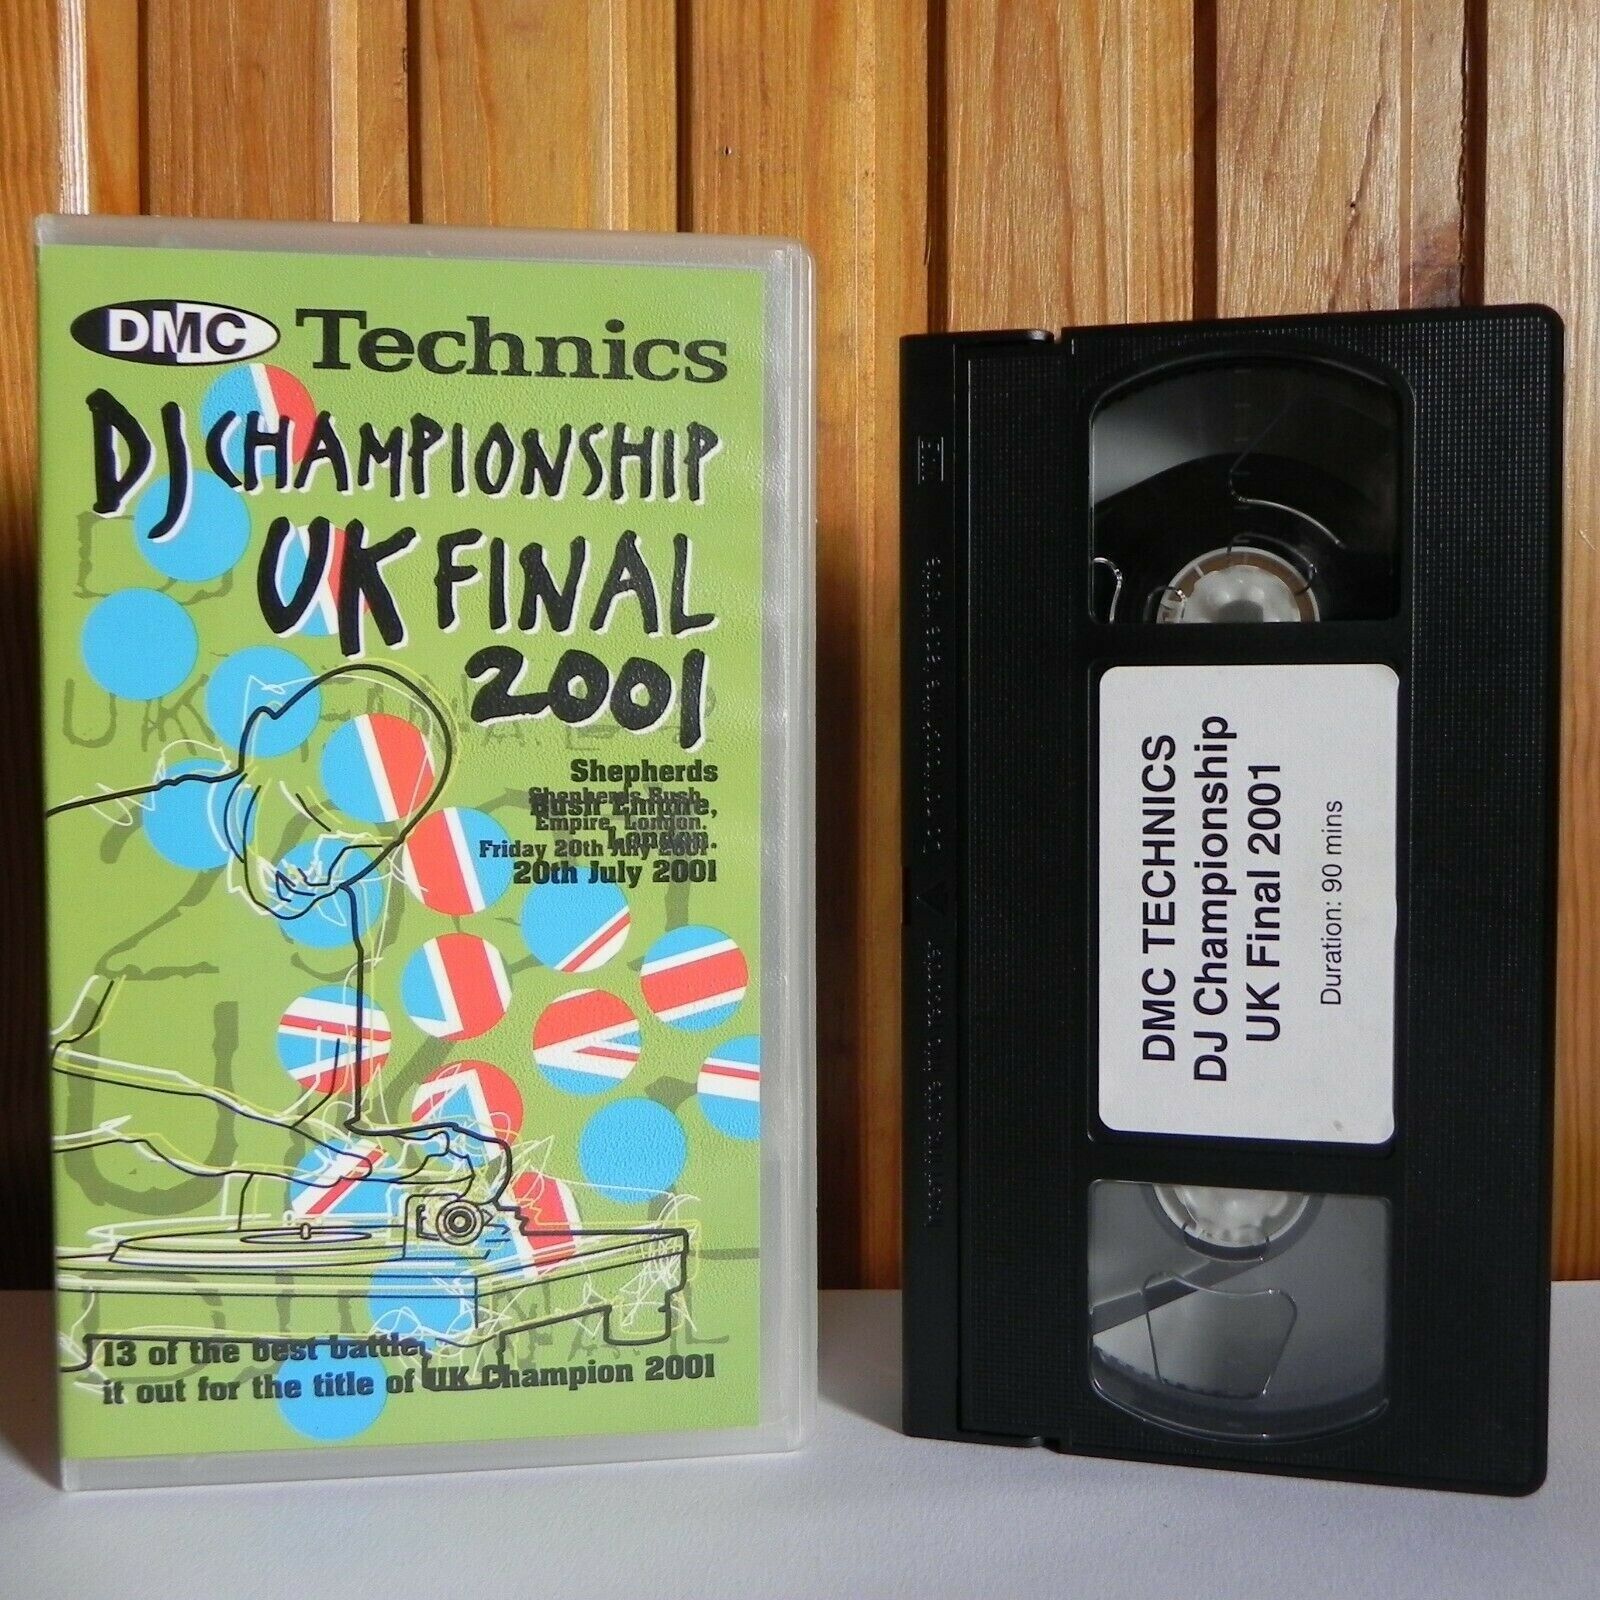 DMC Technics DJ Championship - UK Final 2001 - 20th July - Bush Empire - Pal VHS-